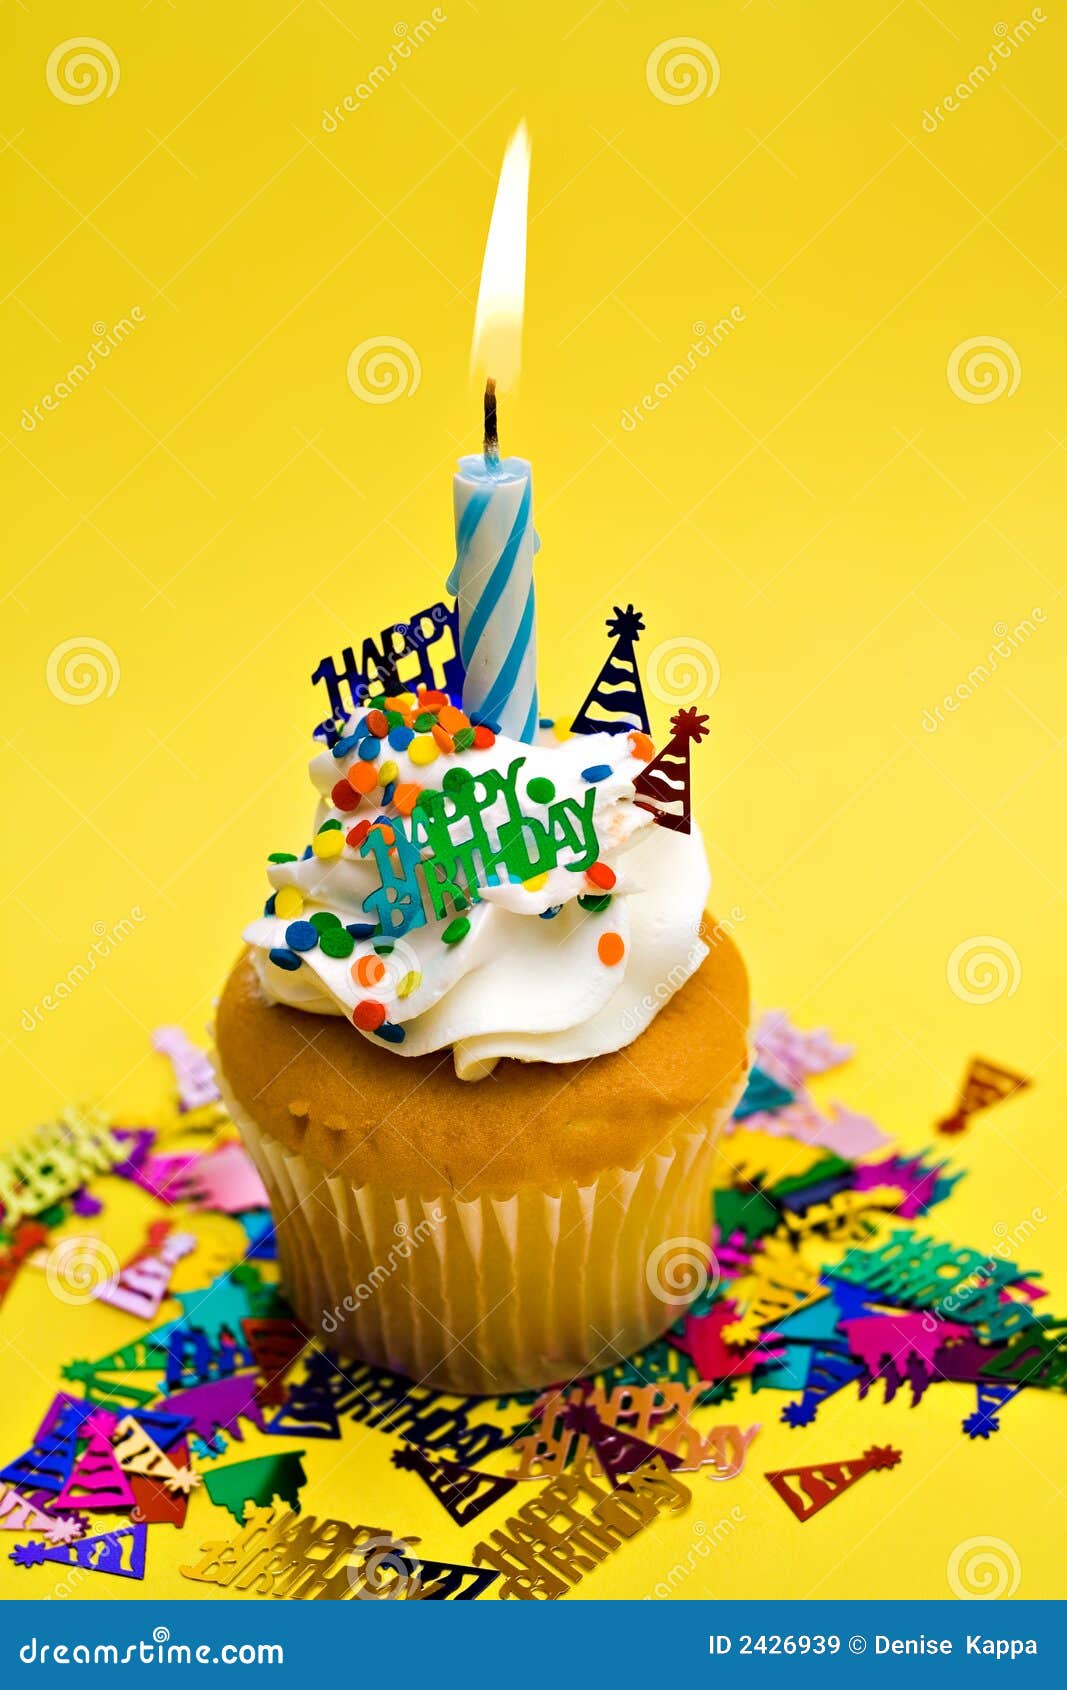 60 bioenvases pasteles-imagen-aufleger fiesta decorativas Magdalena cumpleaños cupcake divertido gracioso